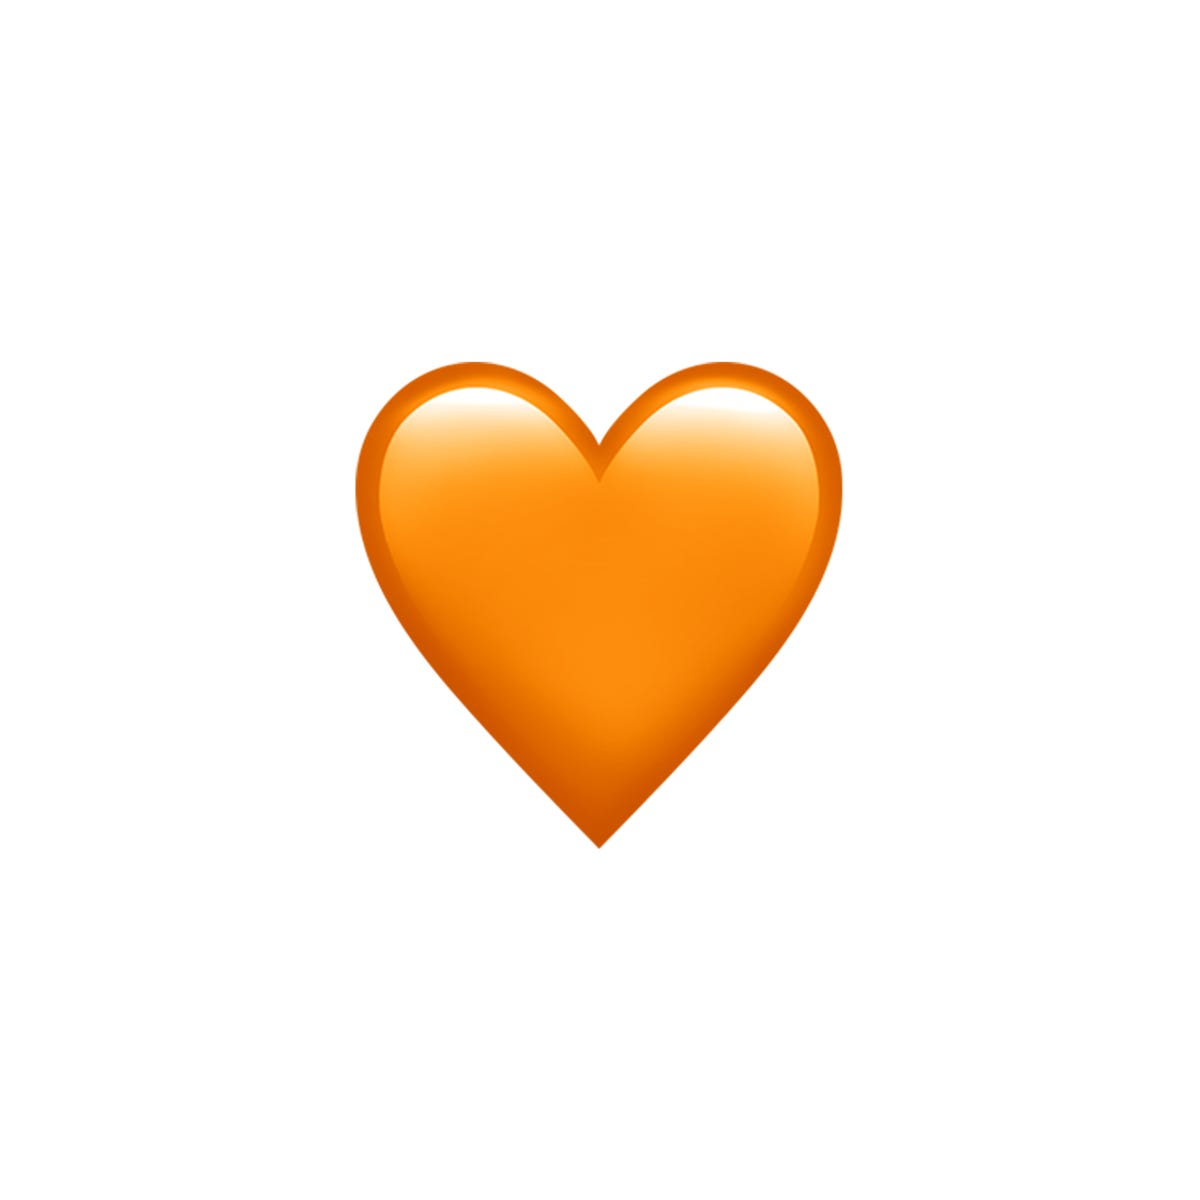 orange-heartsized